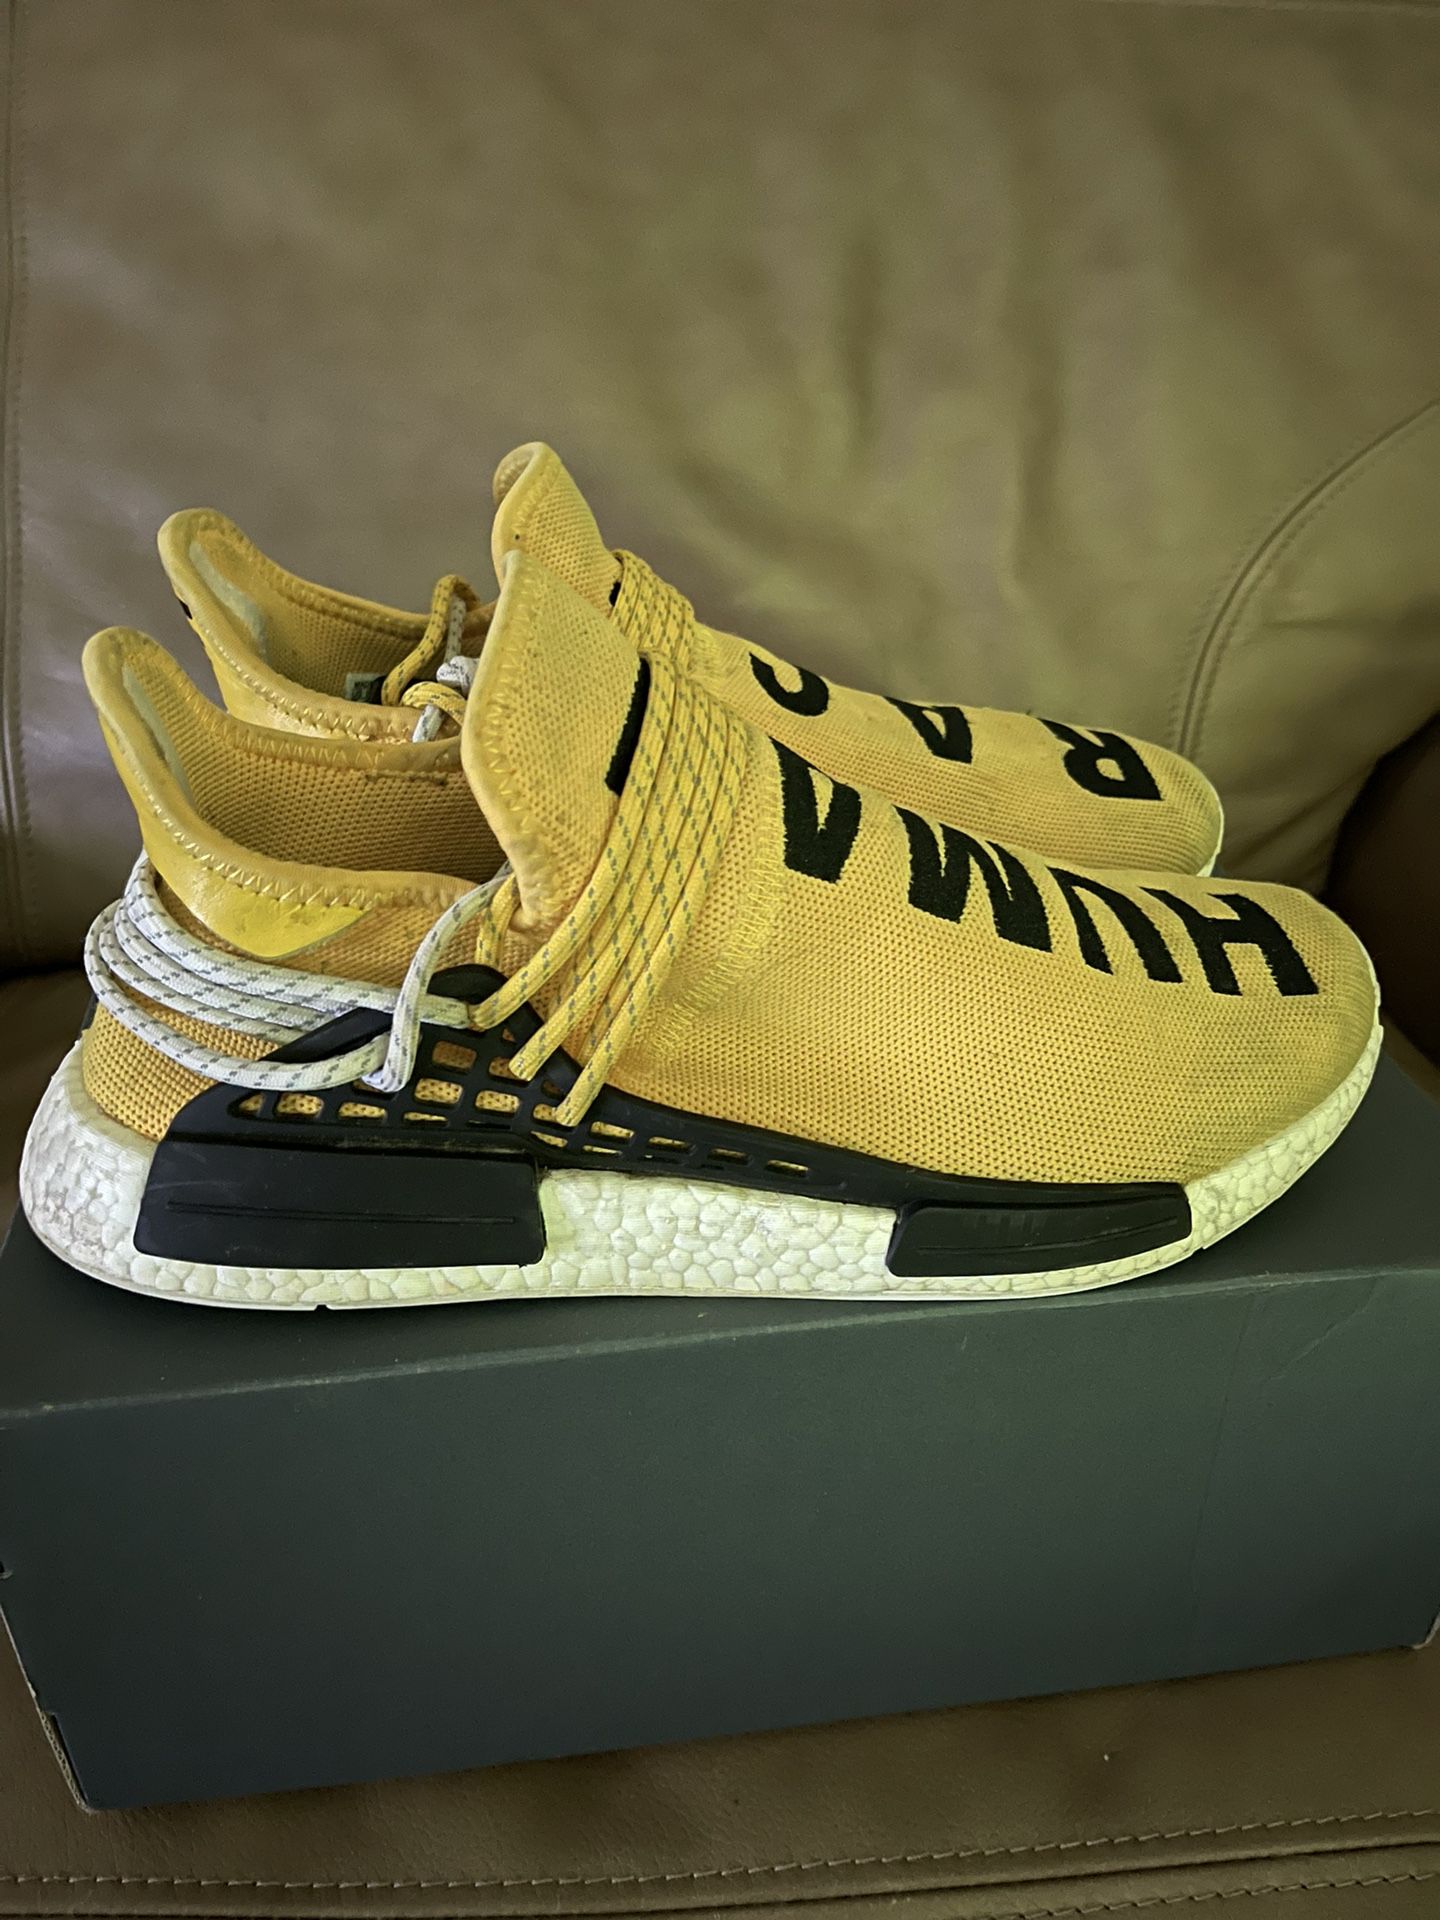 Pharrell Williams "EQT Yellow" (Human Race) adidas worth $1,000+